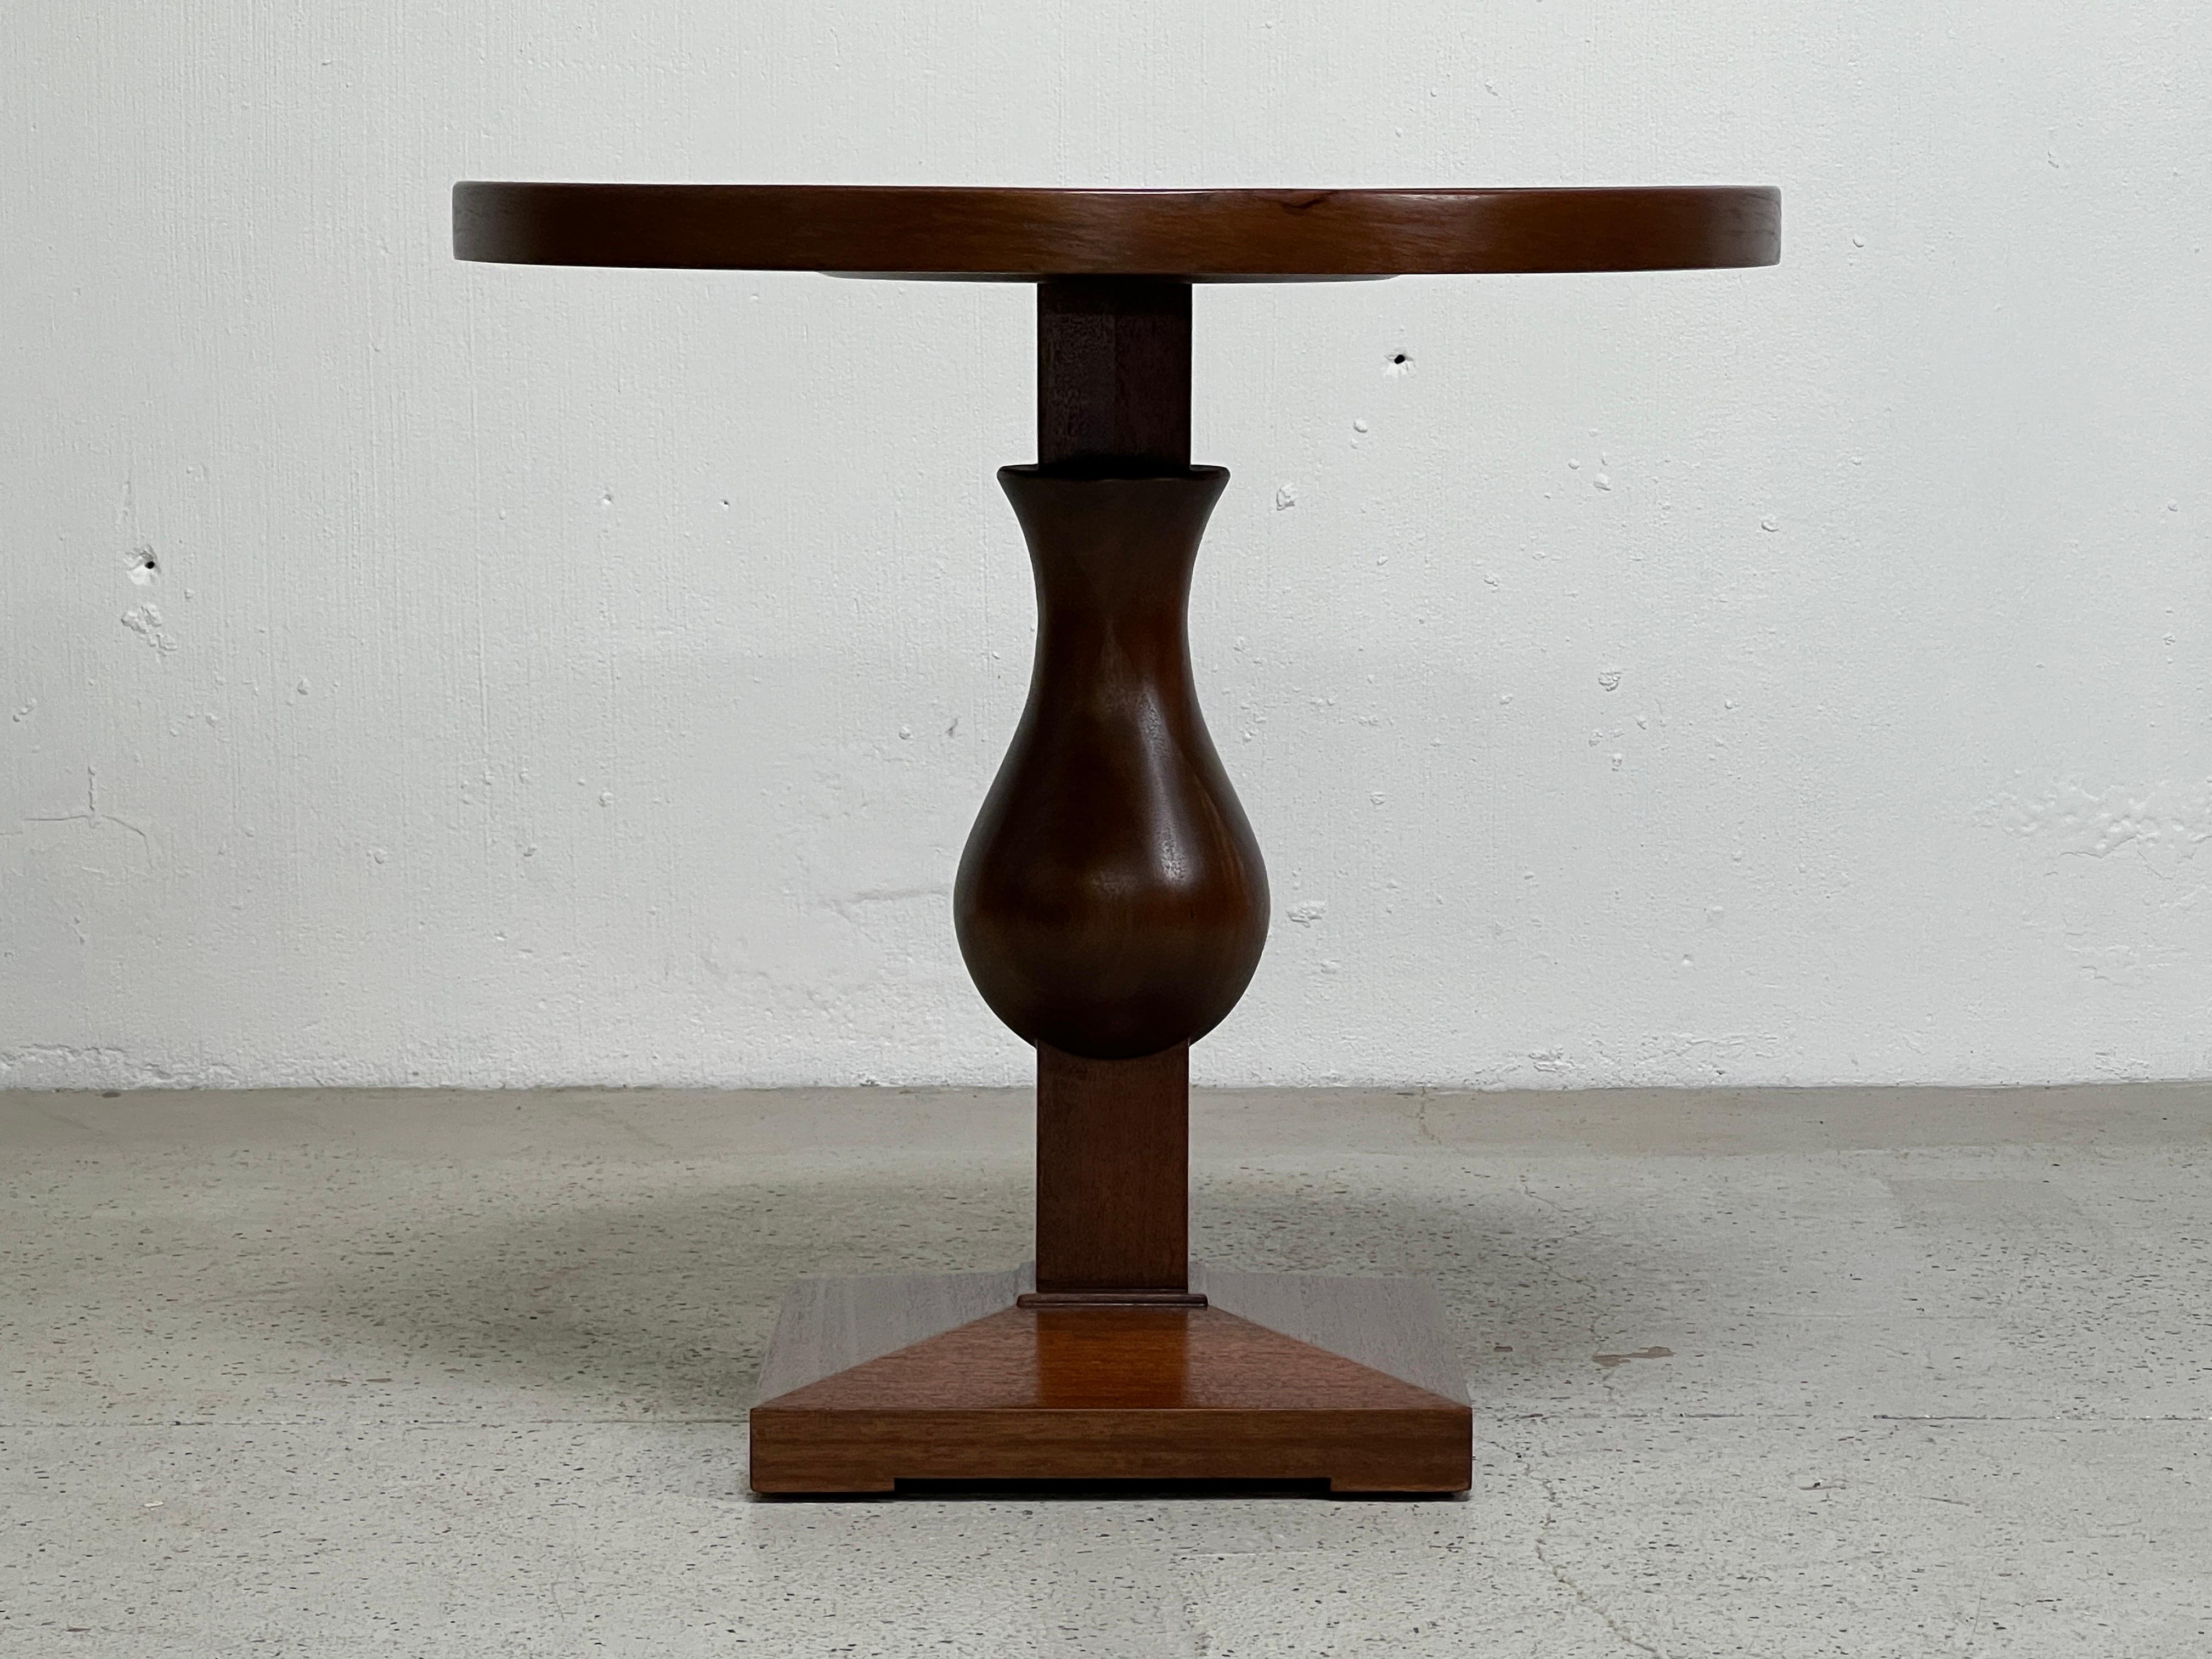 A mahogany pedestal table designed by Edward Wormley for Dunbar.